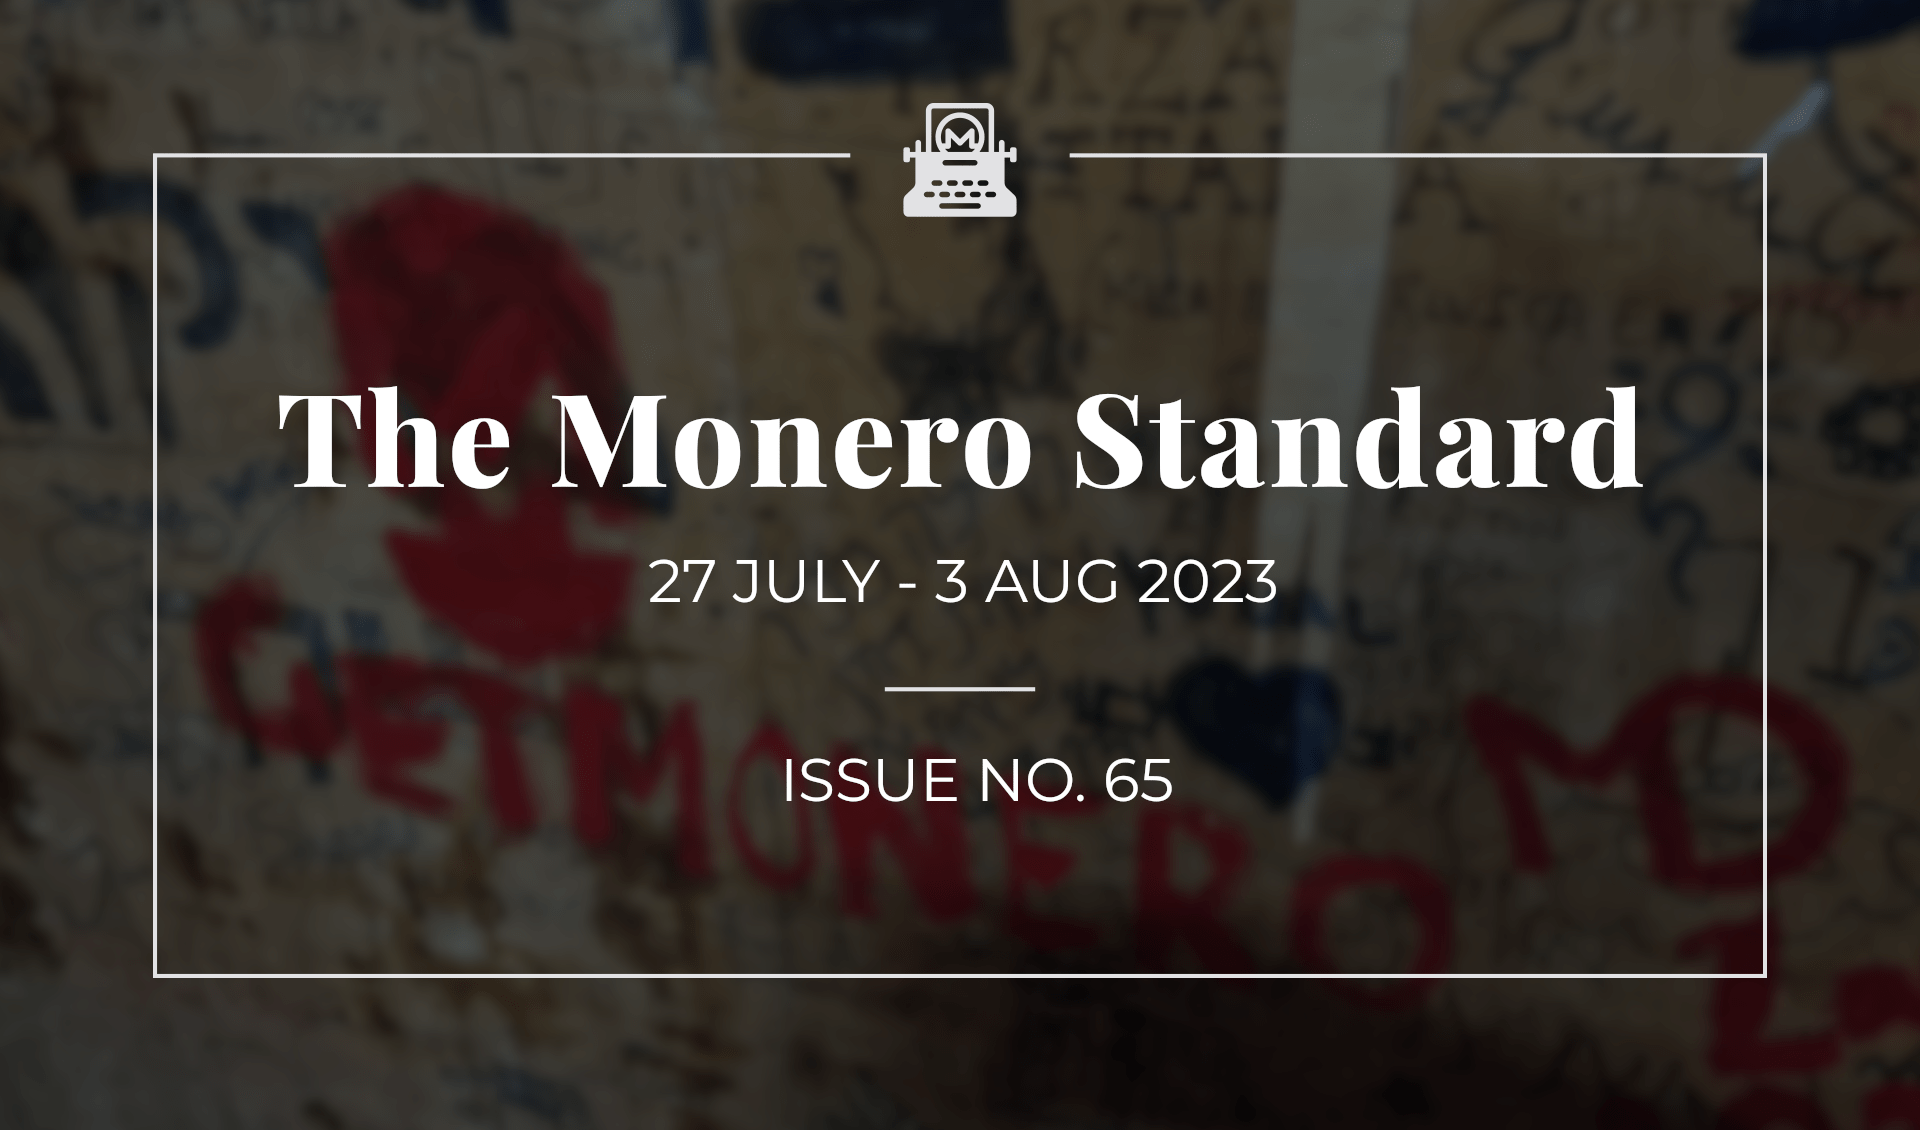 The Monero Standard #65: 27 July 2023 - 3 Aug 2023